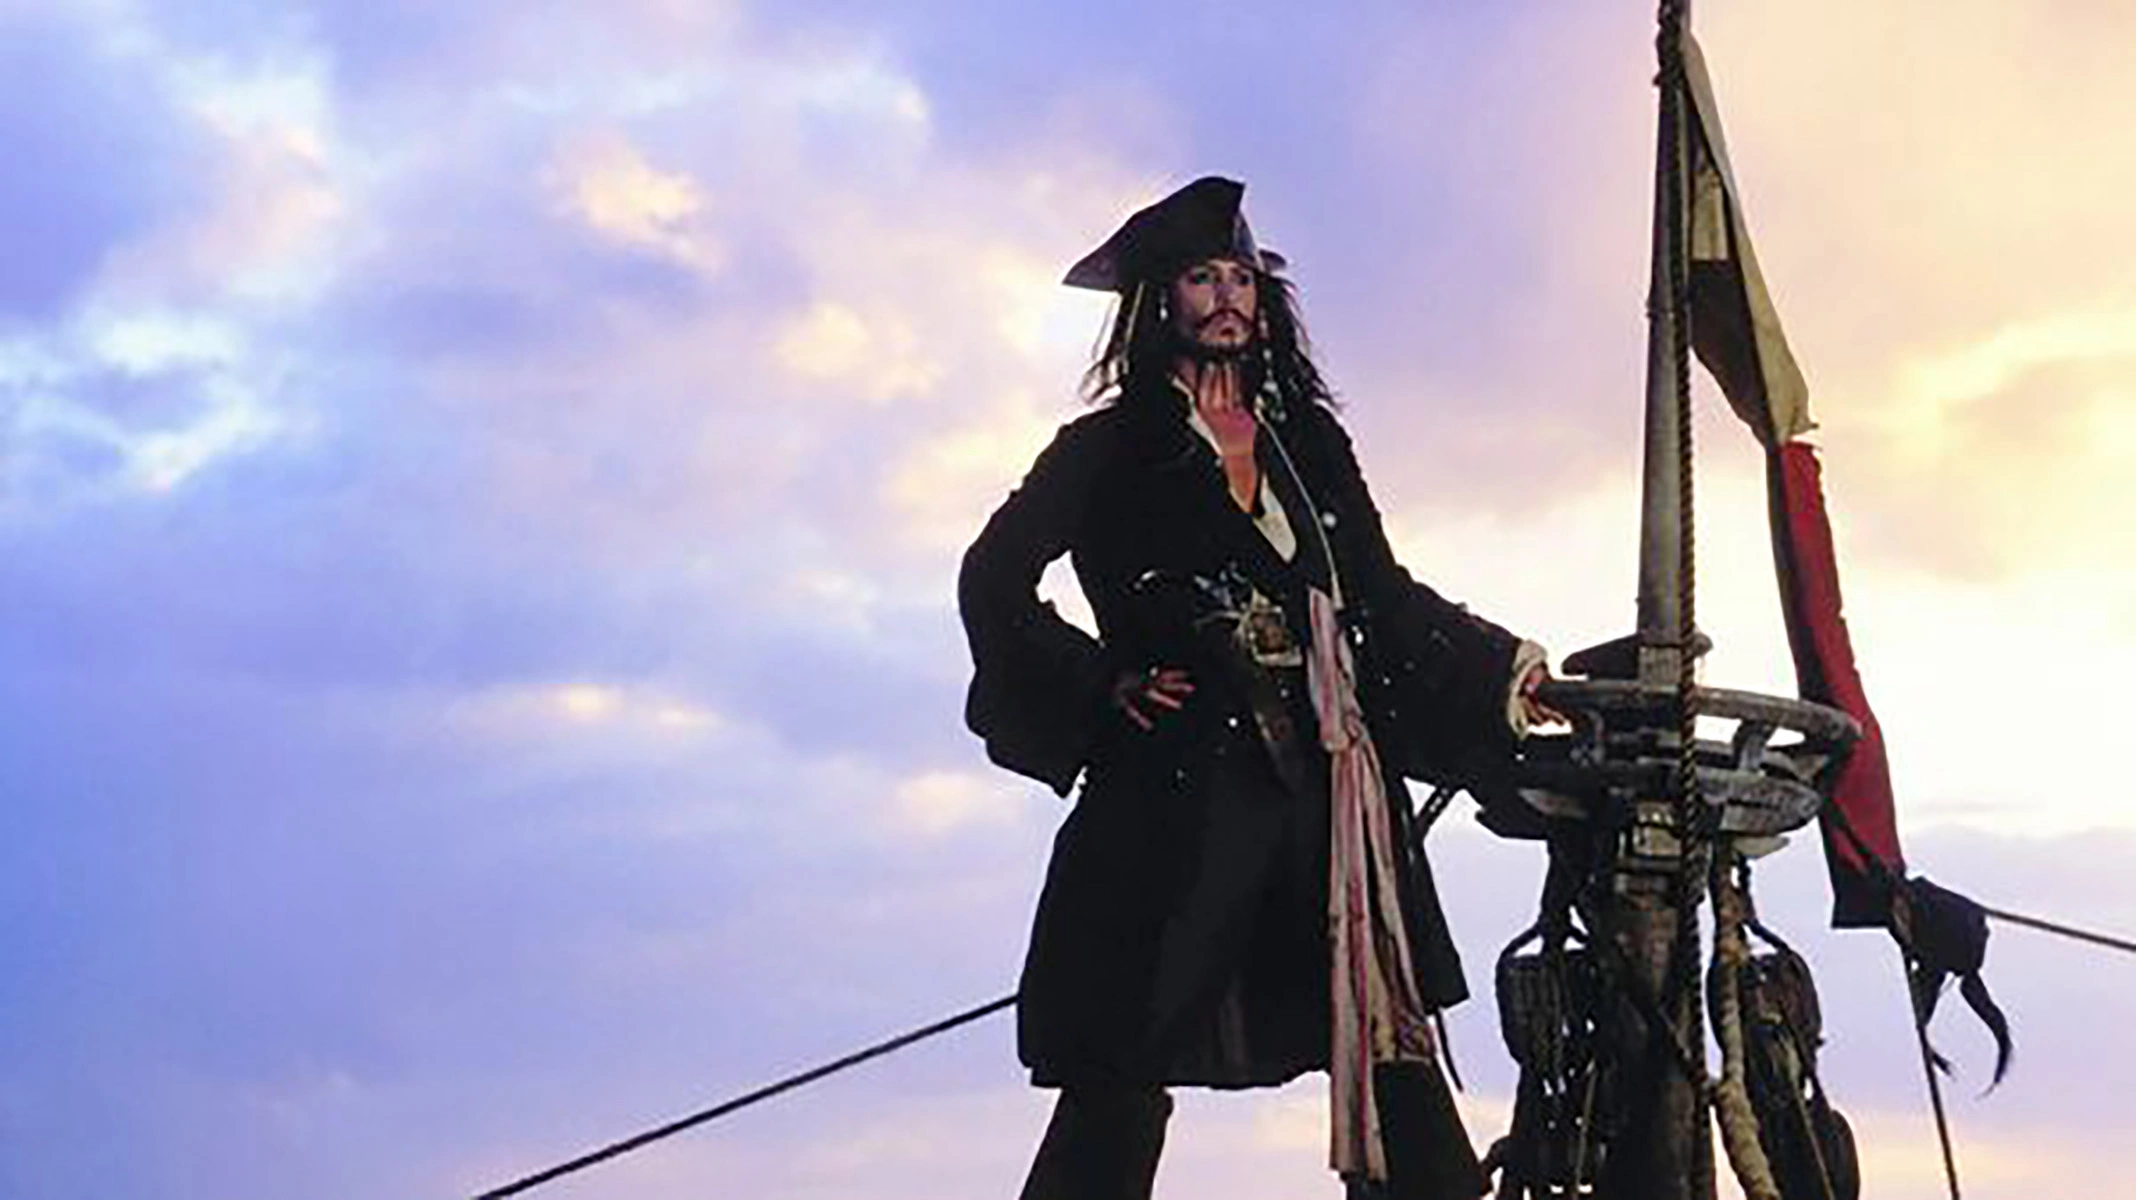 <p>Кадр из фильма &laquo;Пираты Карибского моря: Проклятие Черной жемчужины&raquo;</p>

<p></p>